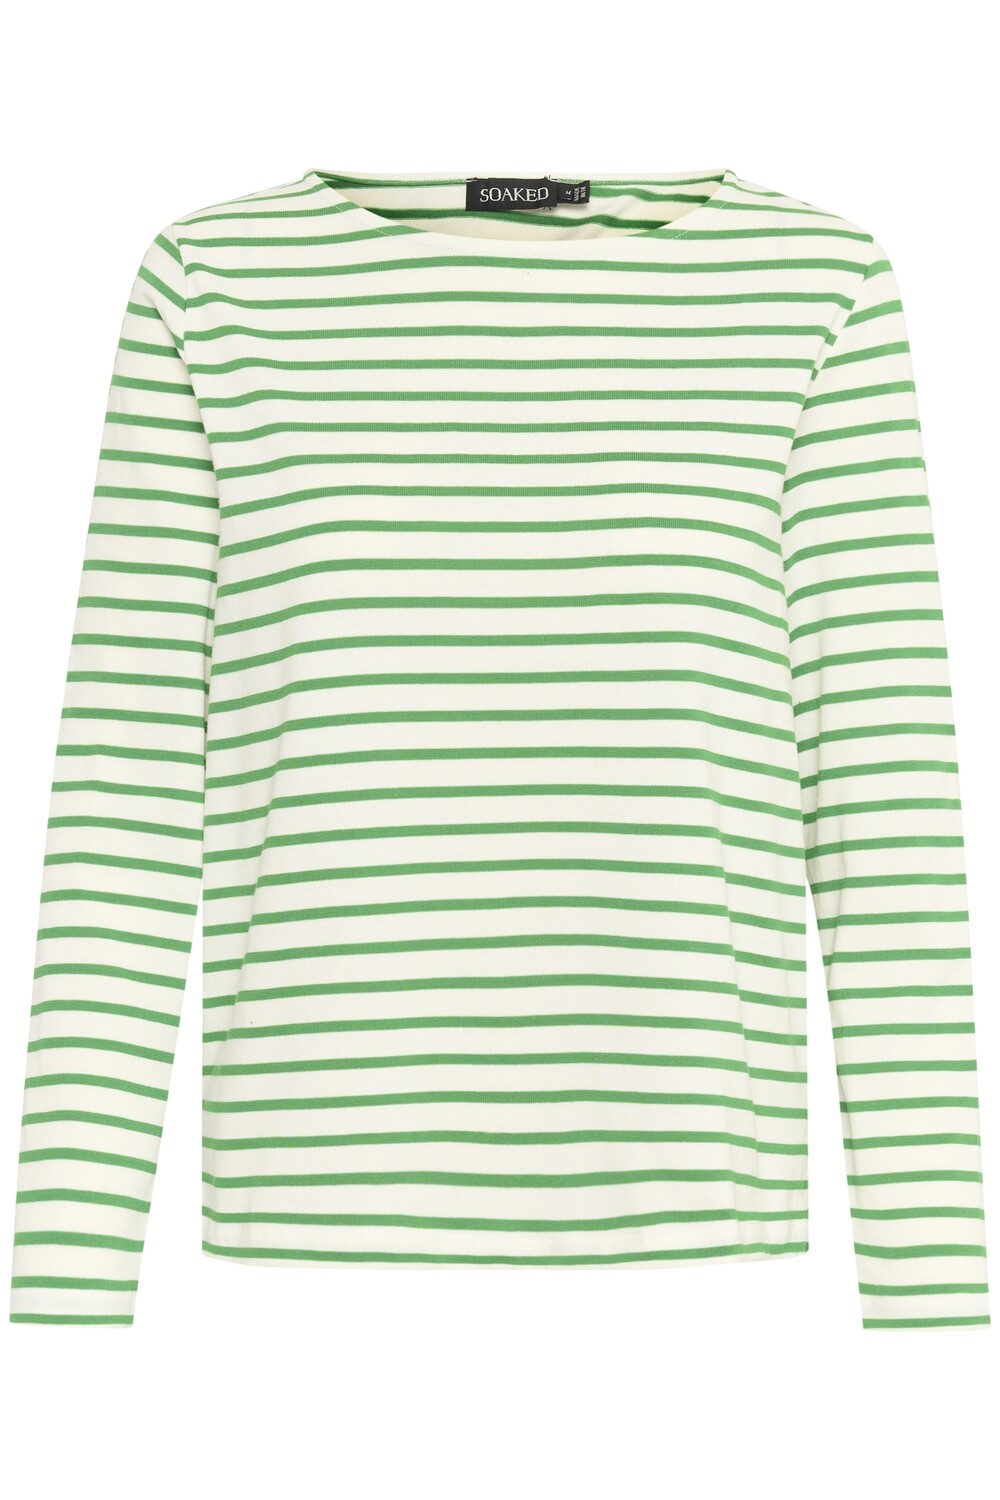 Soaked - Neo Tee Long Sleeve (Medium Green Stripe)